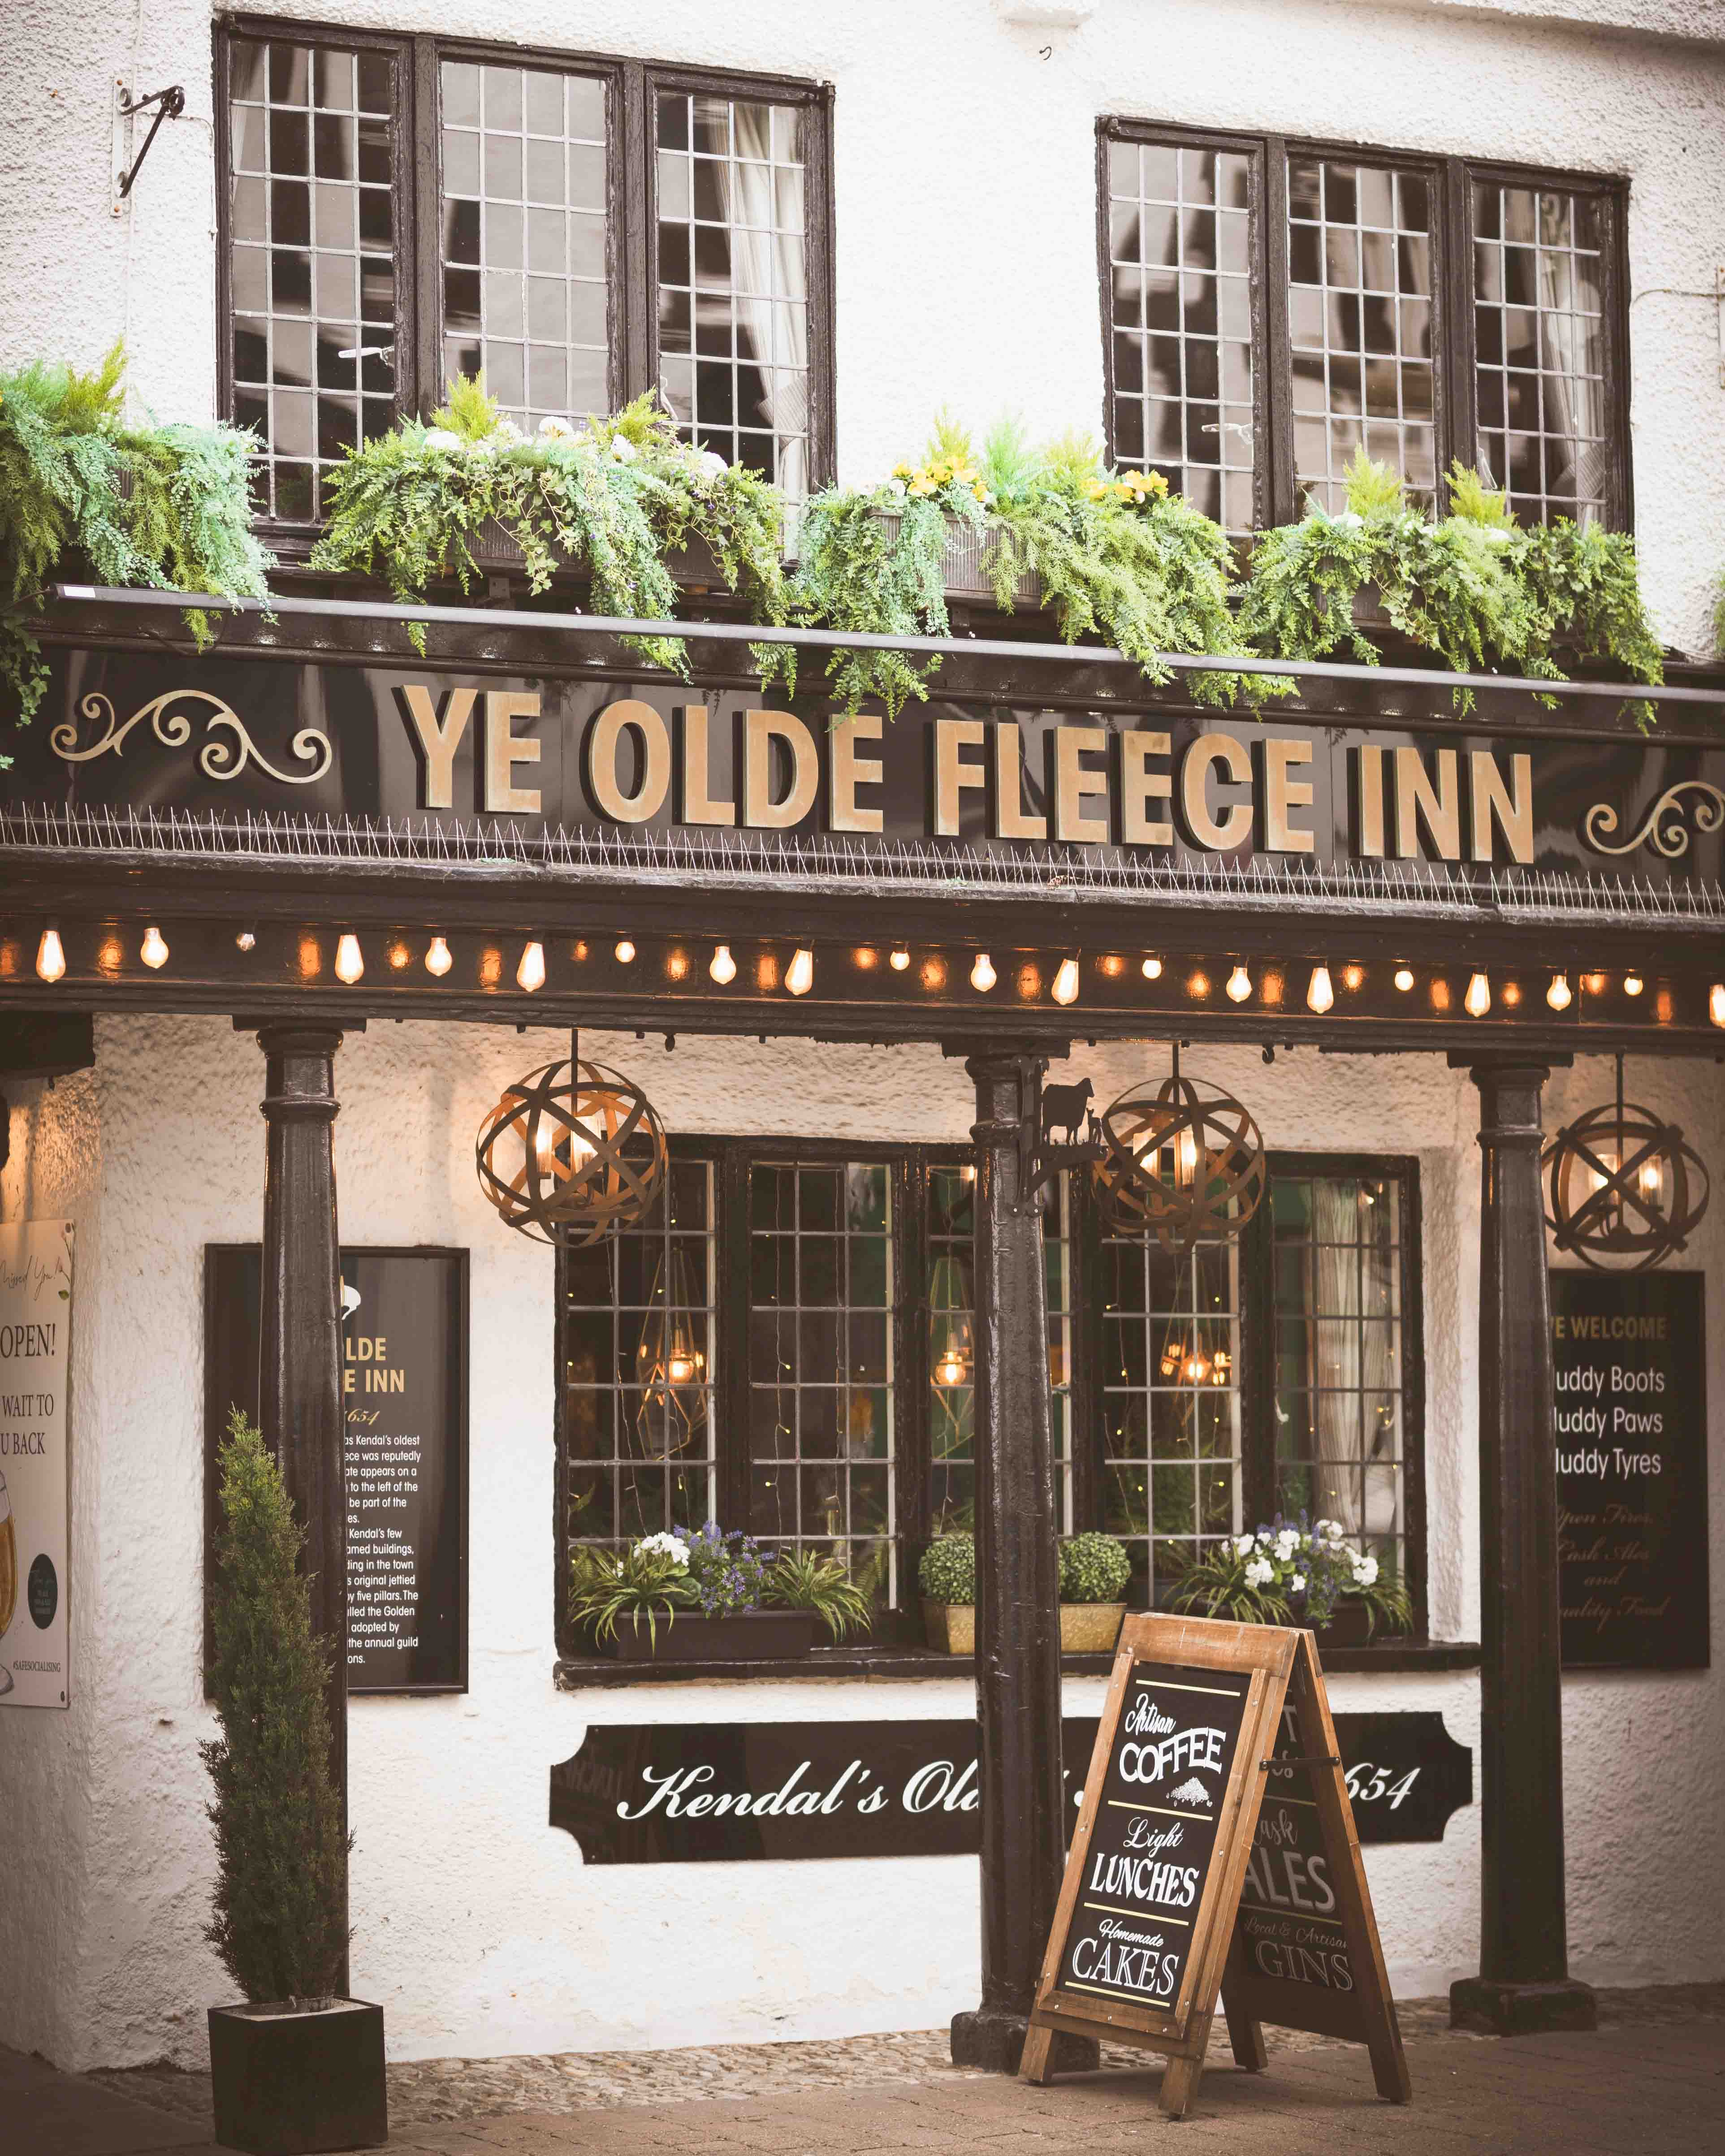 Wooden timber exterior of Ye Olde Fleece Inn, the oldest pub in Kendal